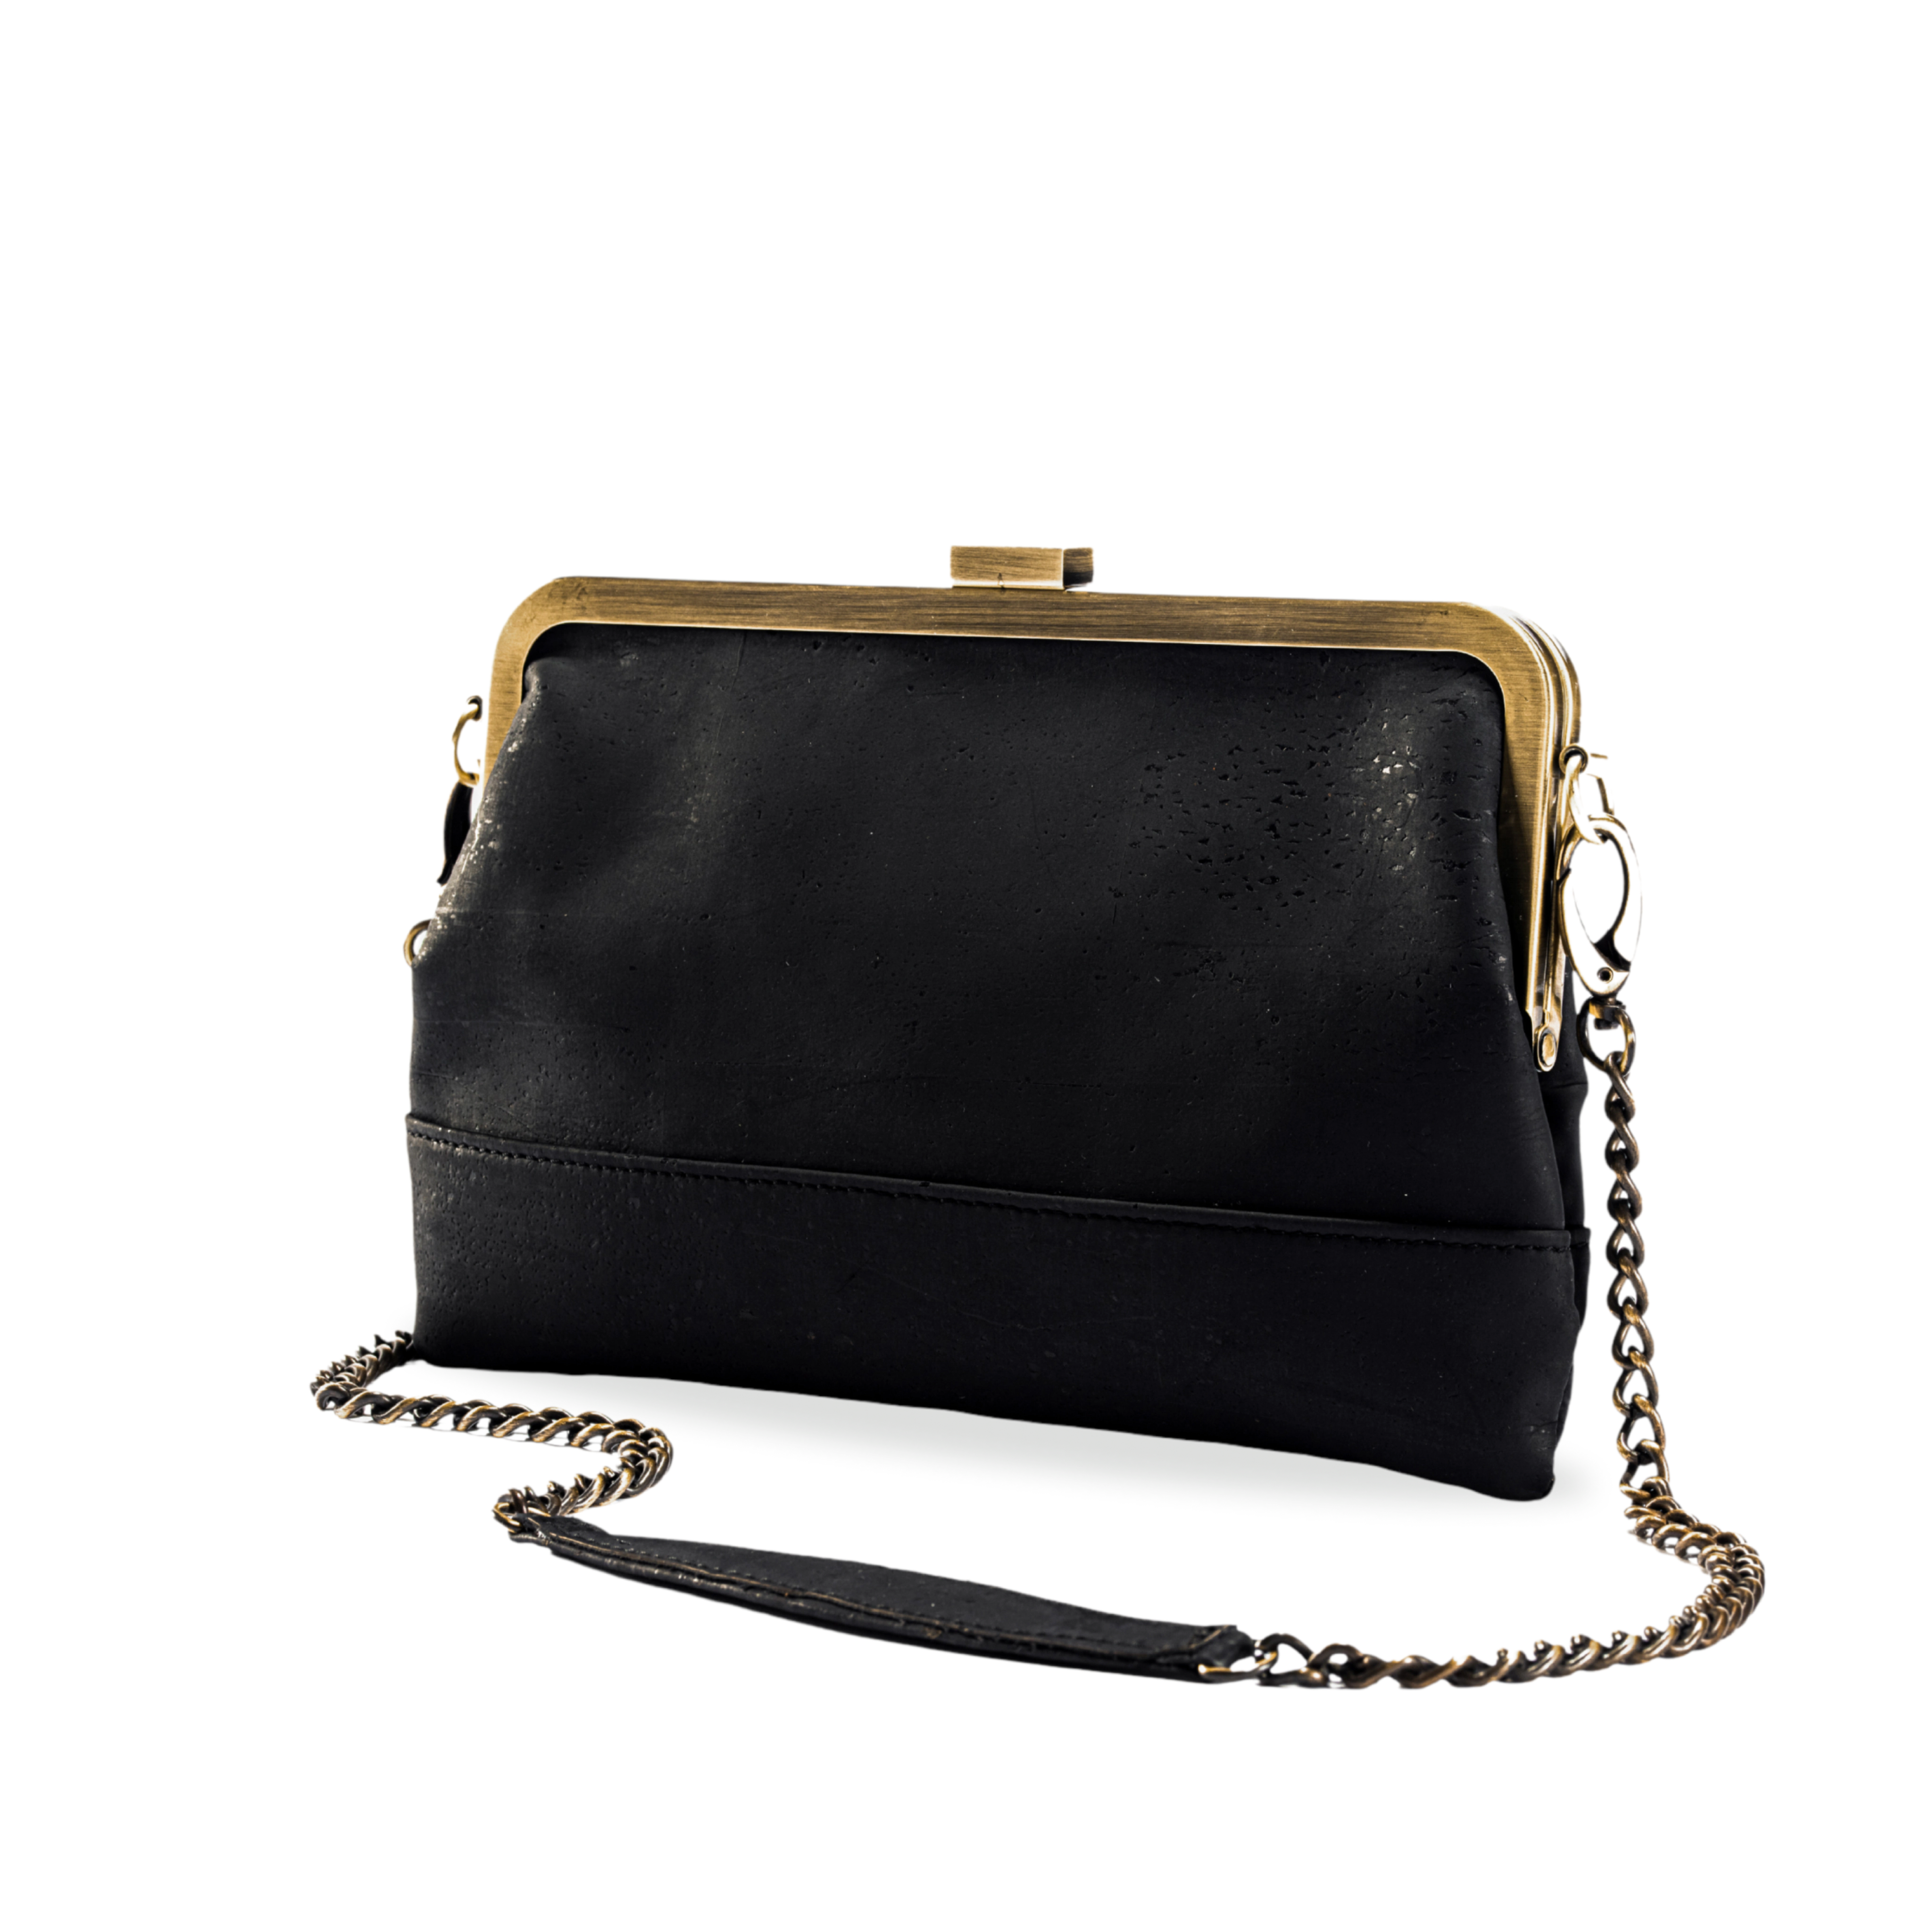 Neiman Marcus Black Clutch Evening Bag With Rhinestones And Detatachable  Chain | eBay